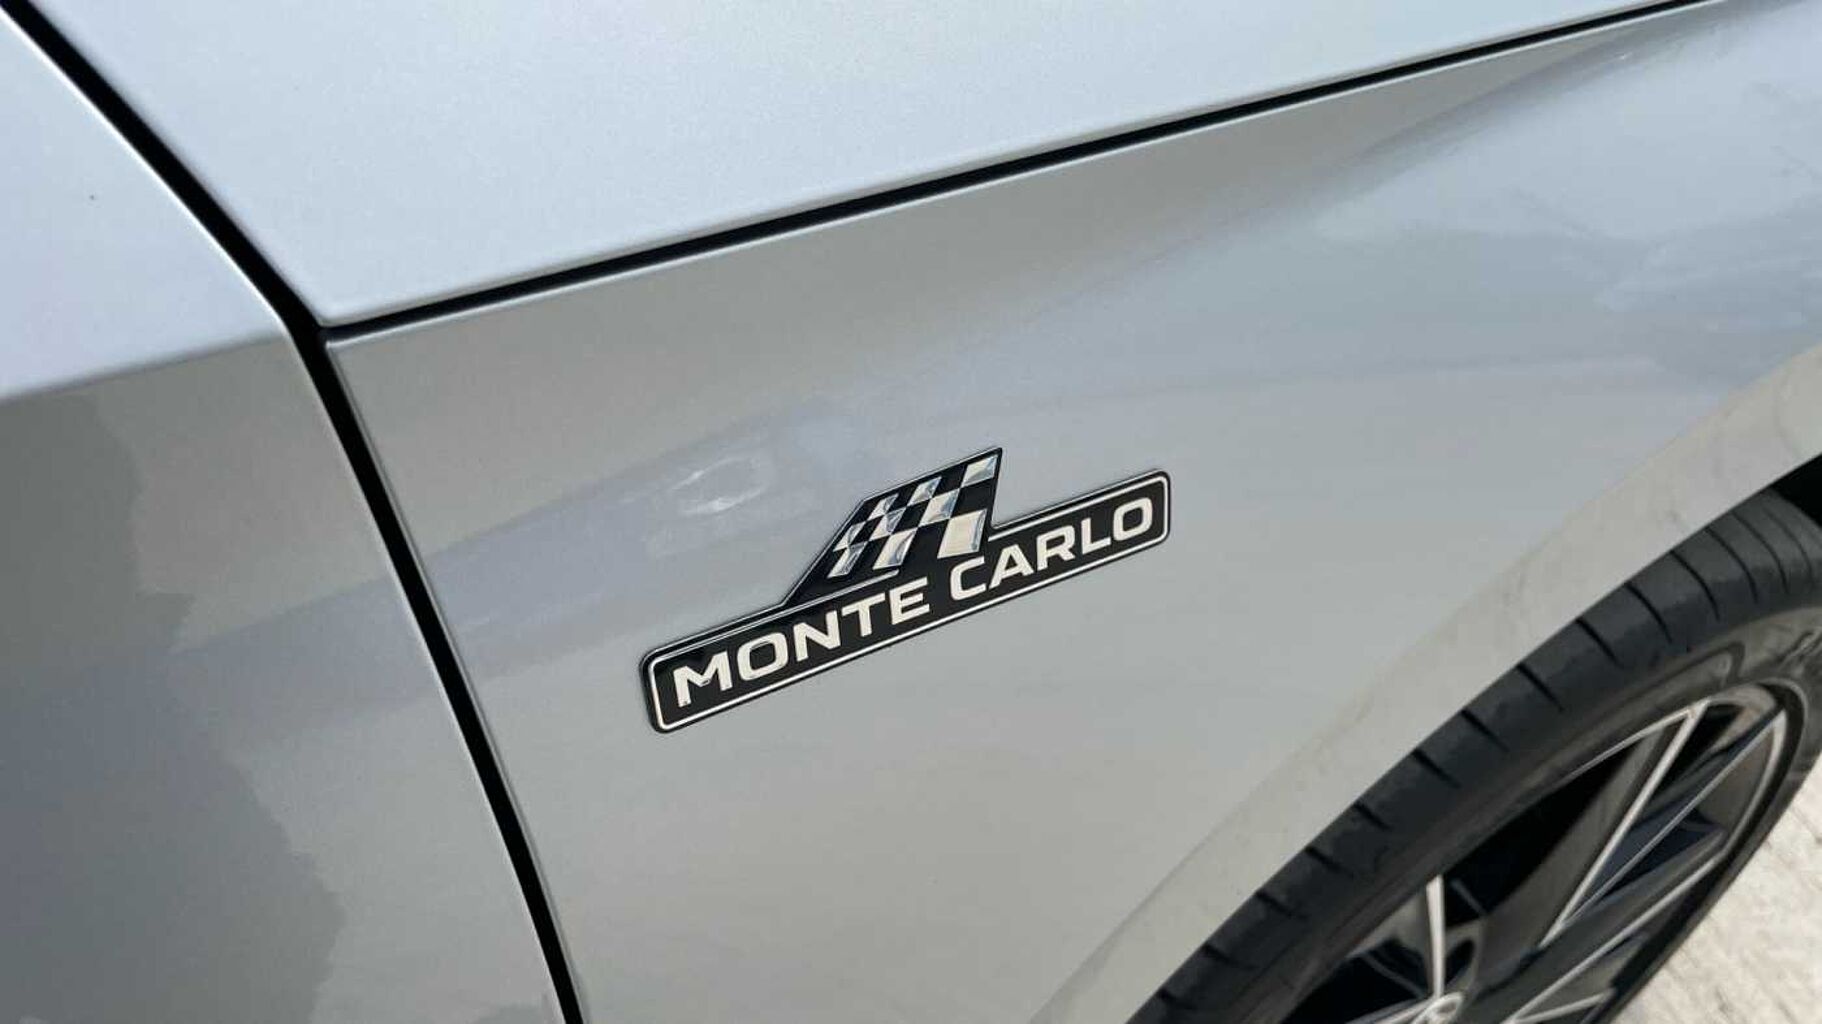 SKODA Kamiq 1.5 TSI (150ps) Monte Carlo DSG SUV